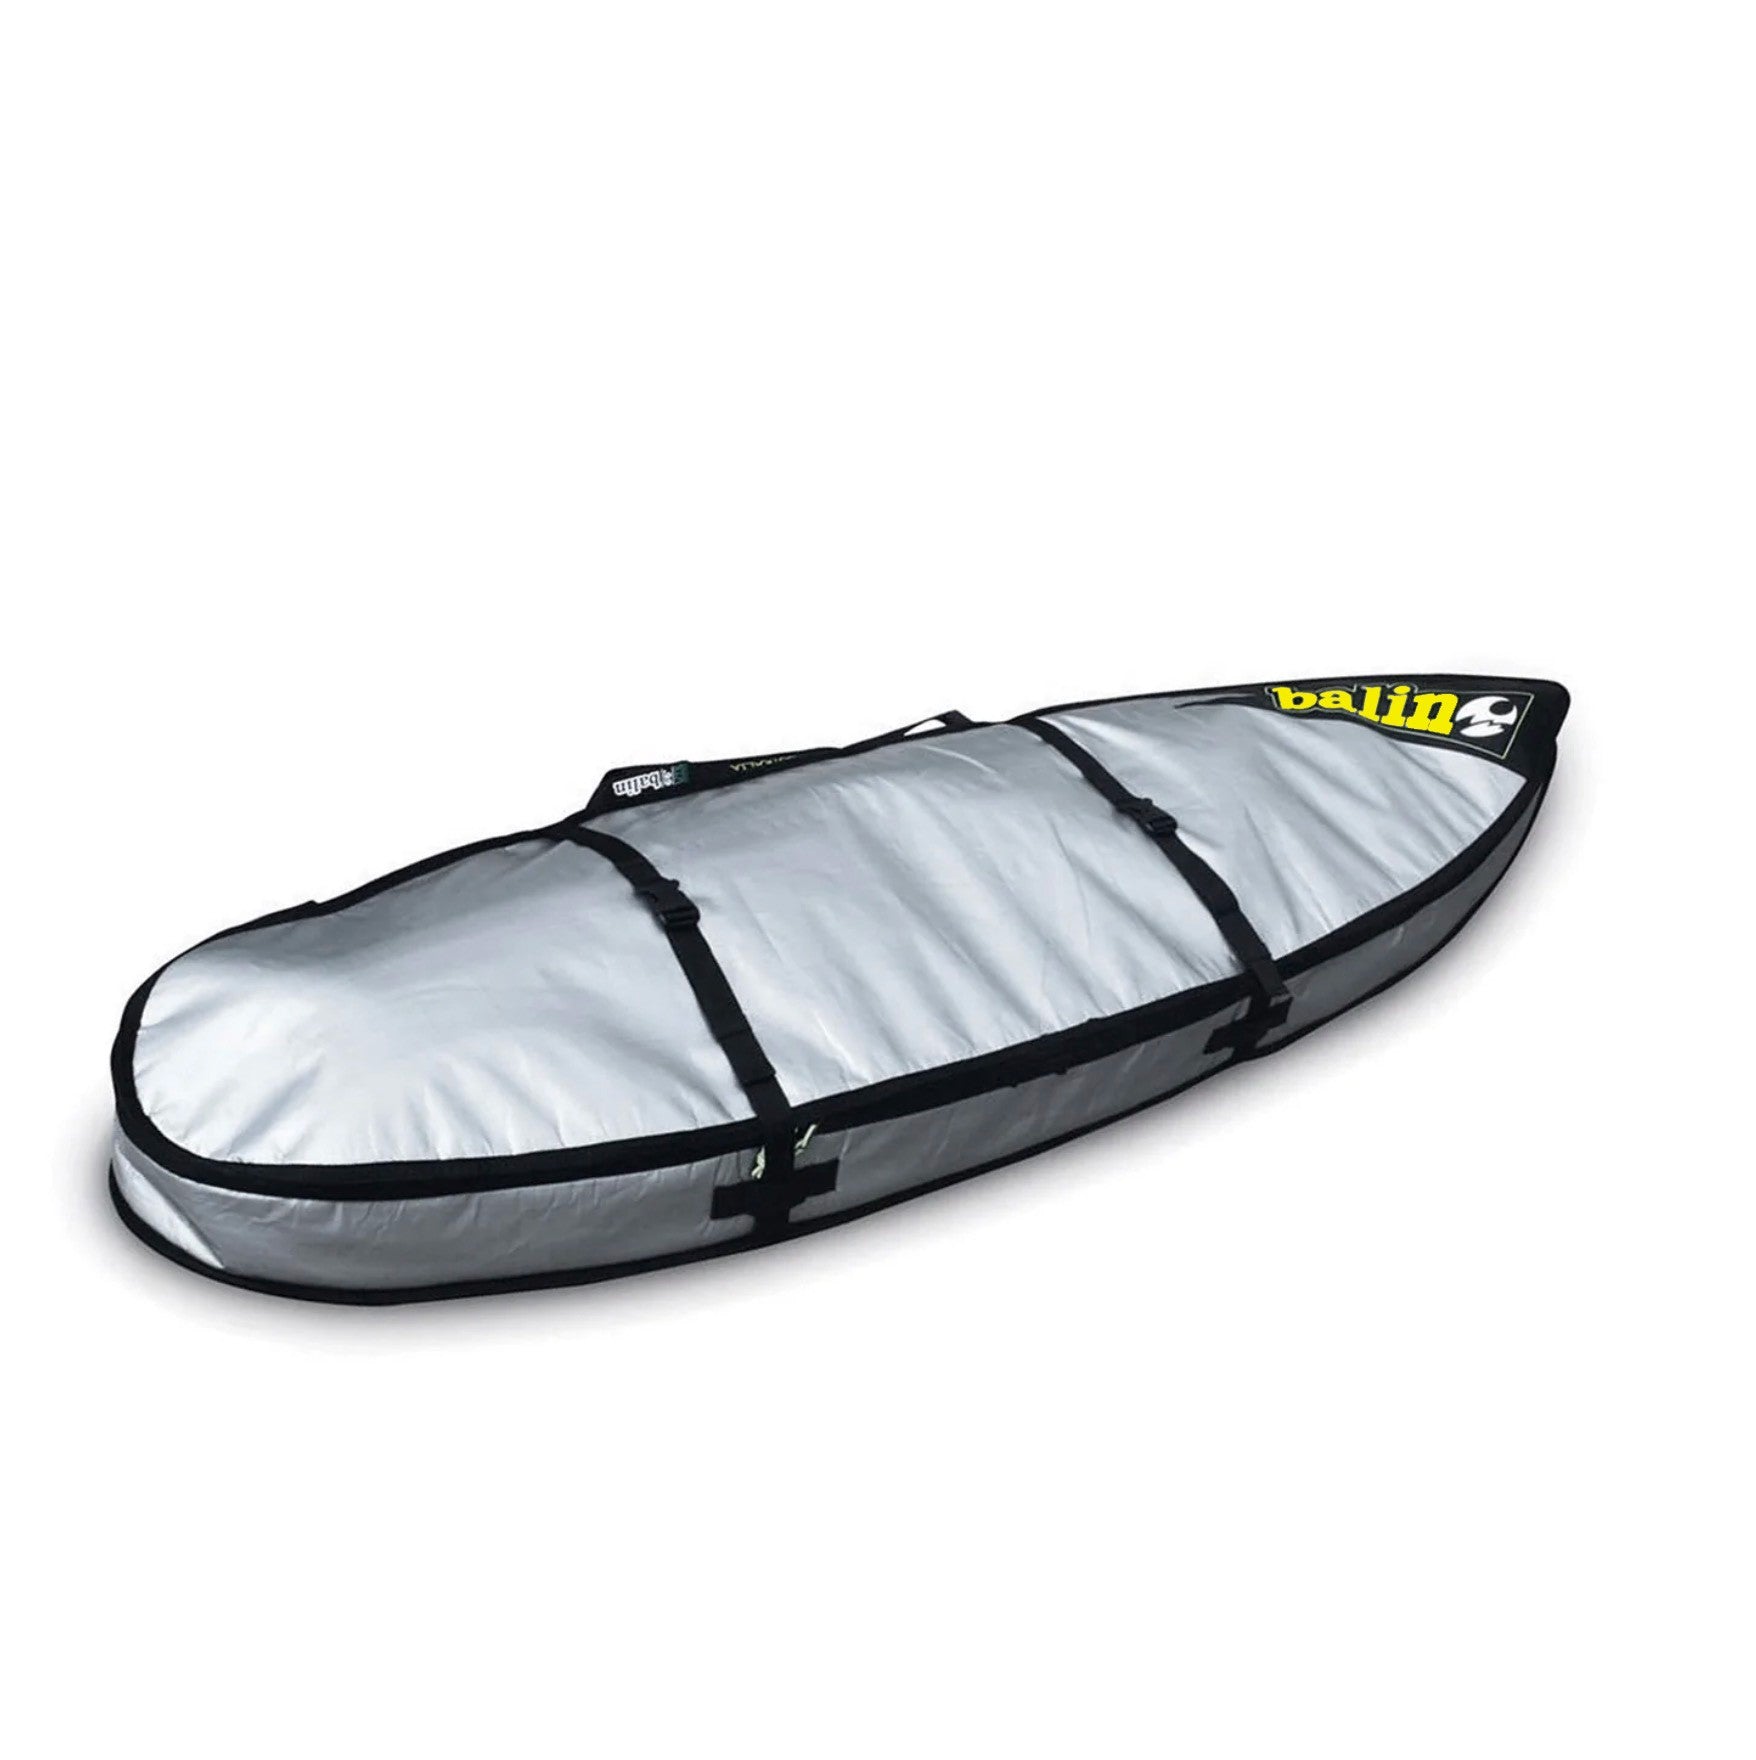 BALIN - Double housse de surf 2 planches - UTE - Shortboard 10mm - Yellow